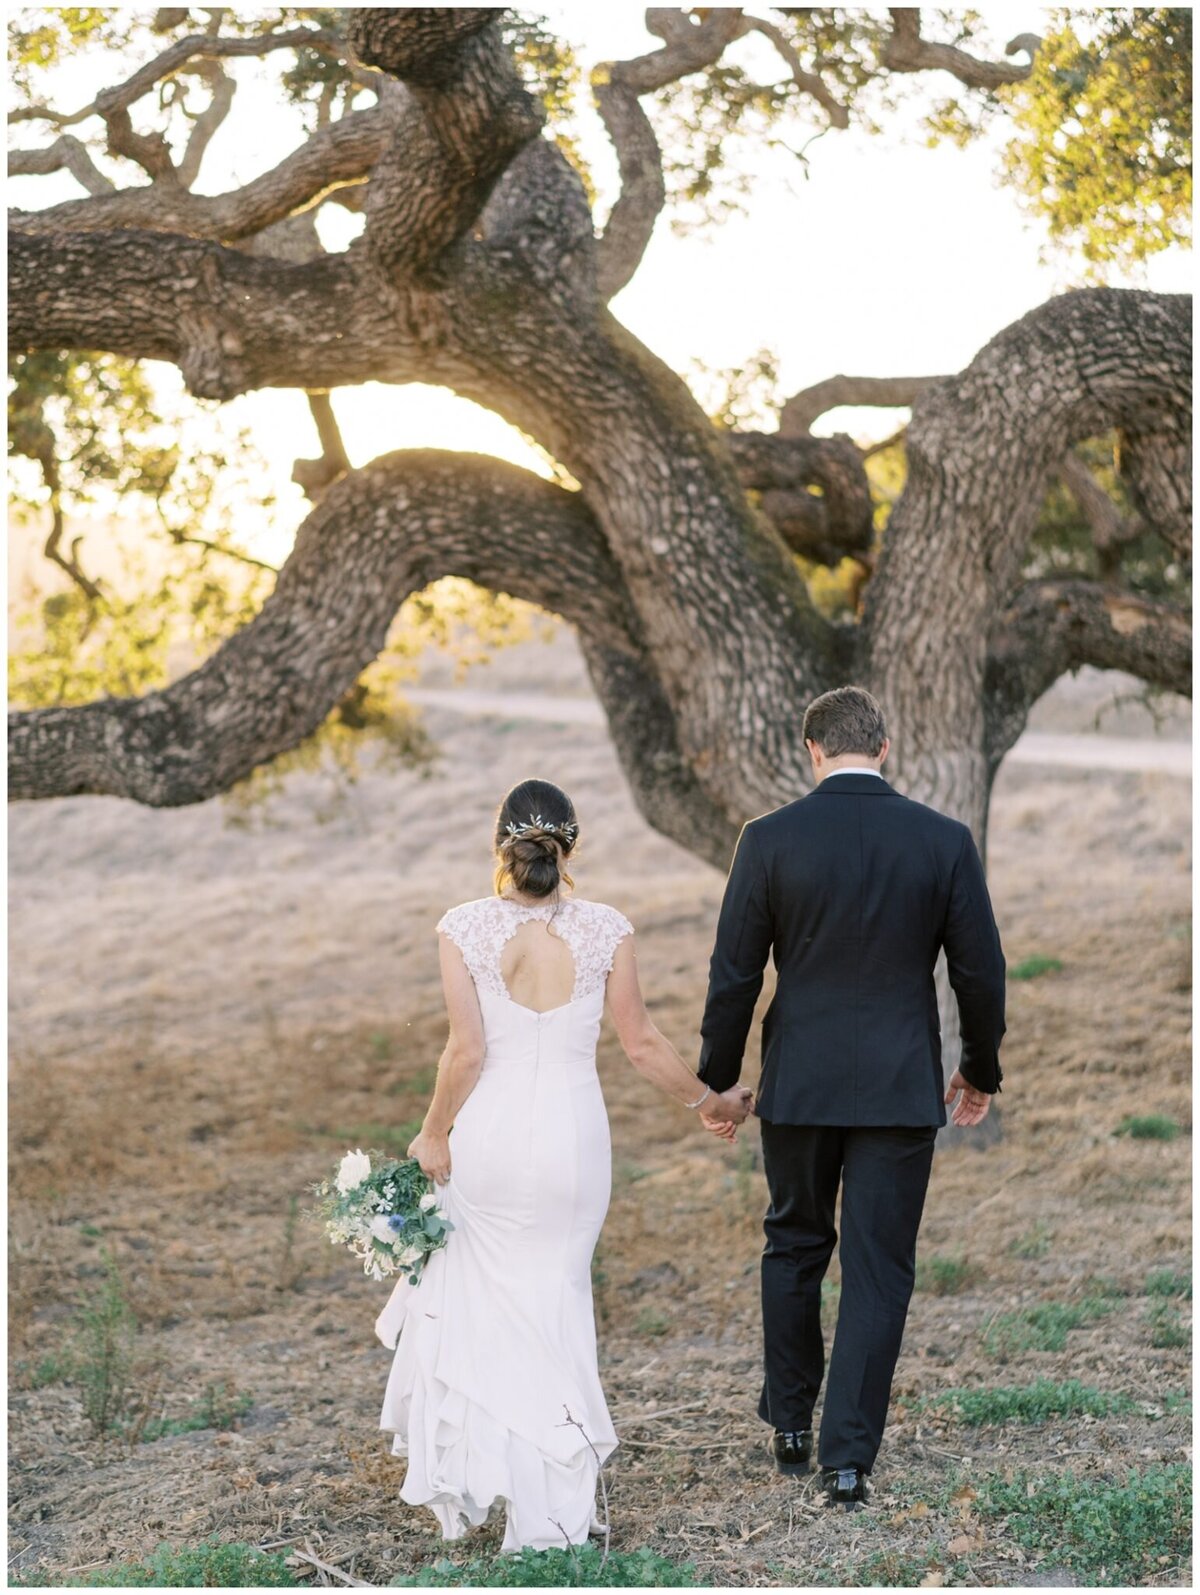 Katie-Jordan-Carmel-Valley-Holman-Ranch-Wedding-Cassie-Valente-Photography-0206-1541x2048